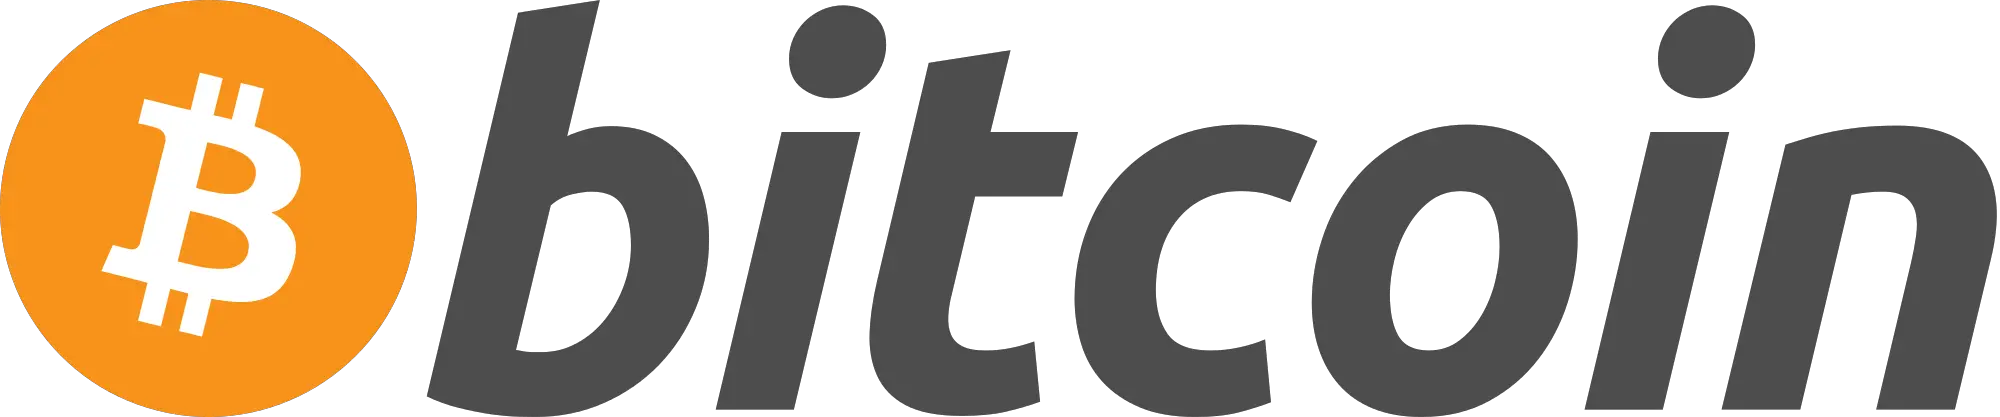 Bitcoin logo.svg